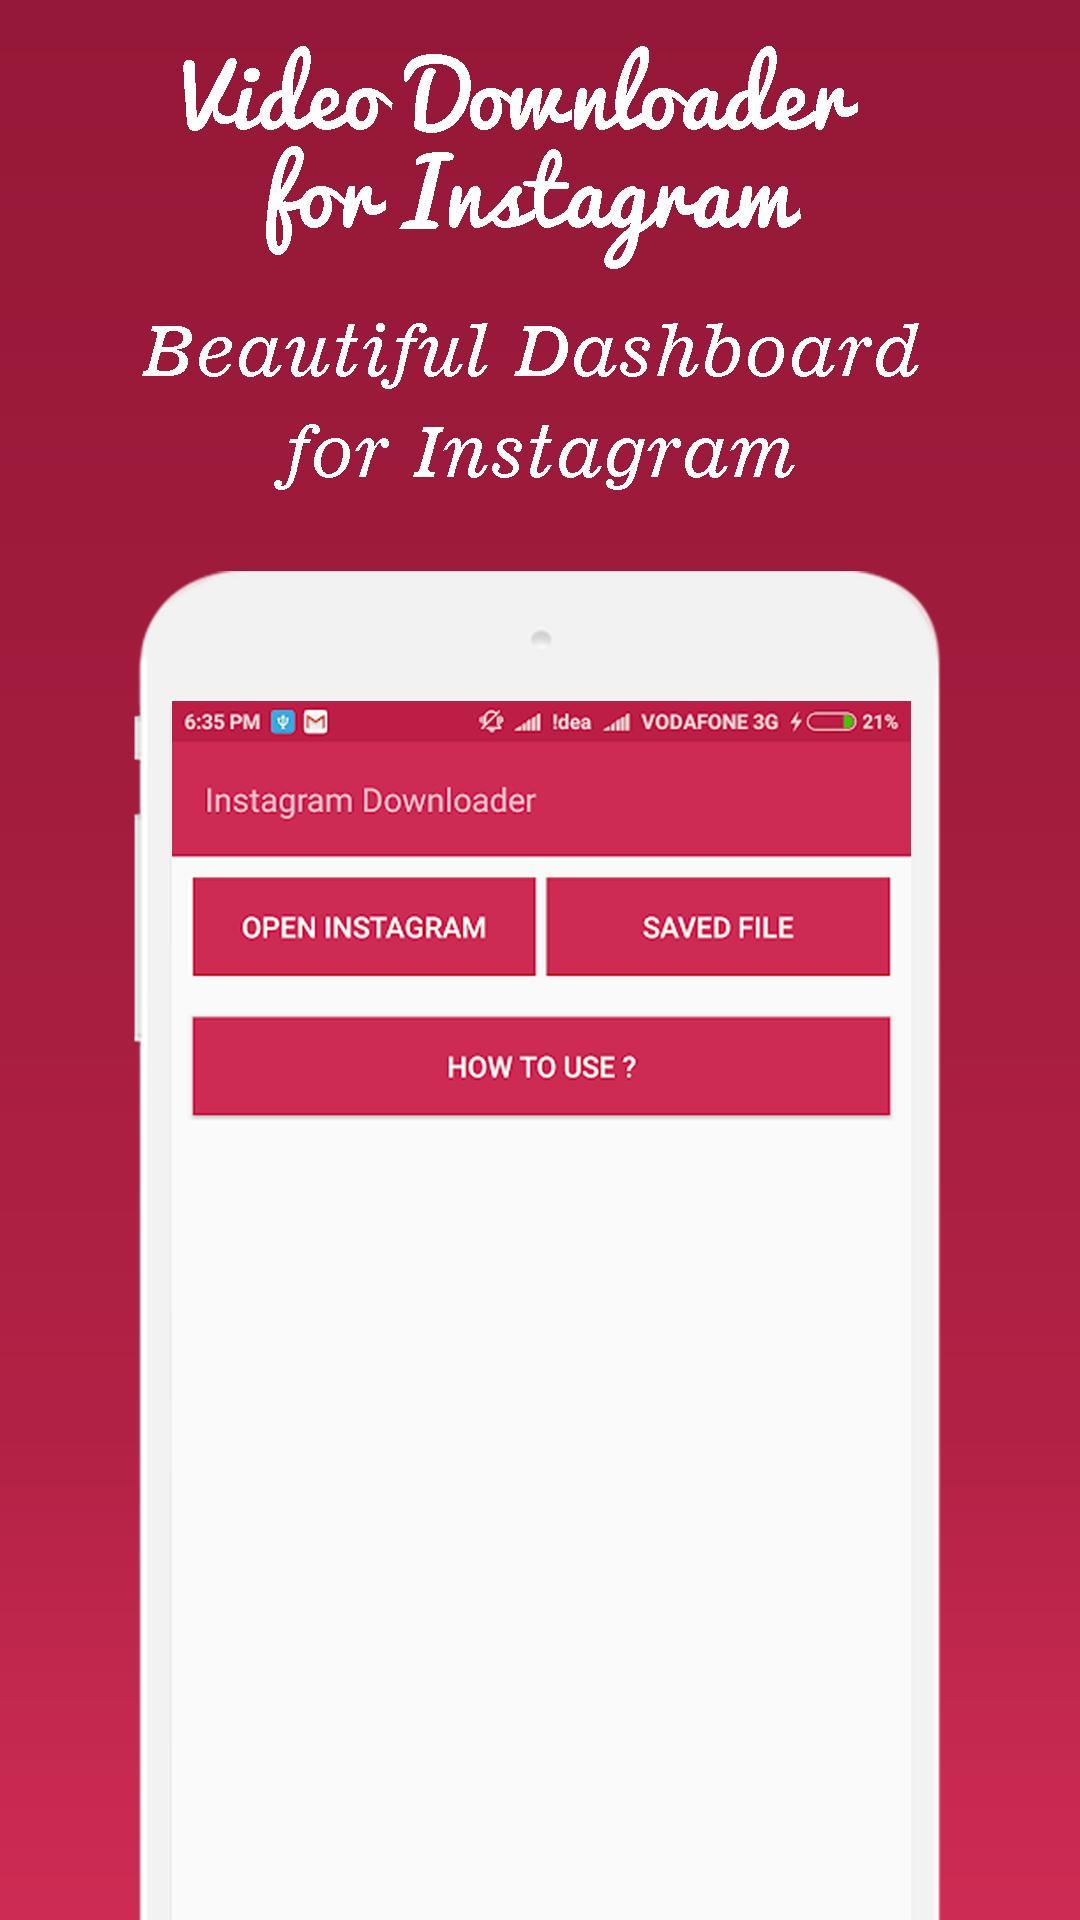 Video Downloader For Instagram For Android Apk Download